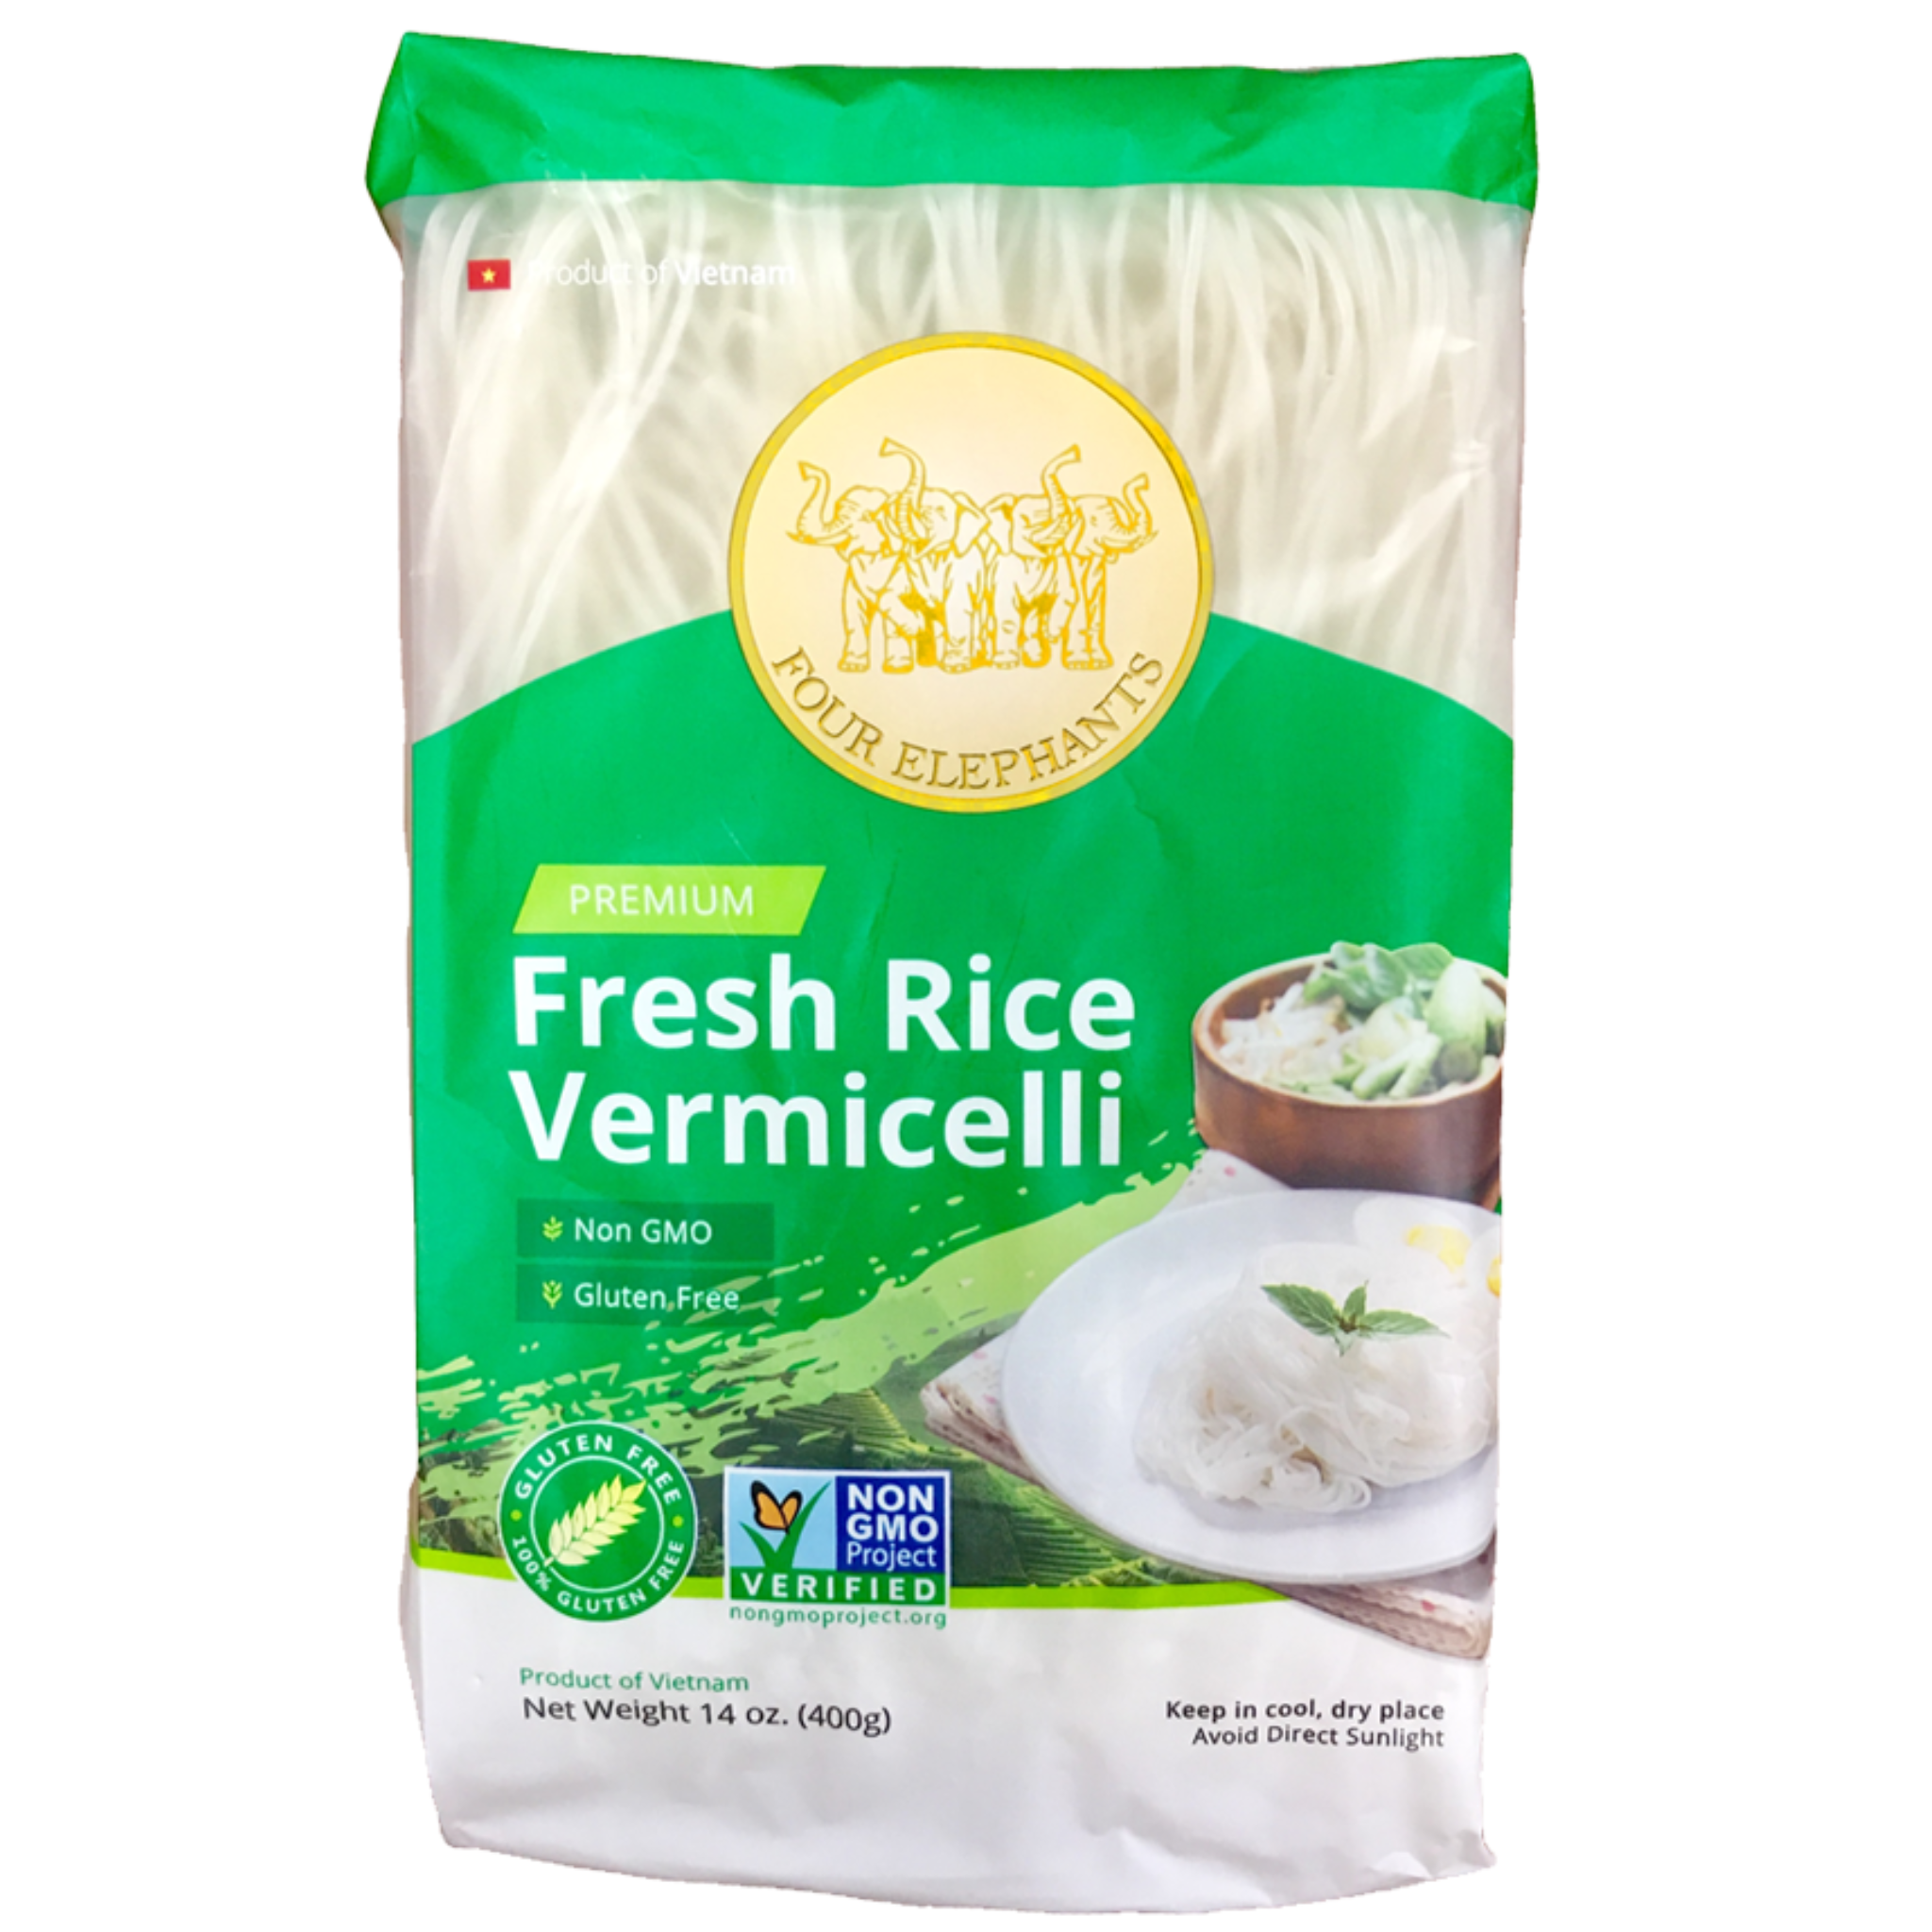 Fresh Rice Vermicelli (3 Pack)